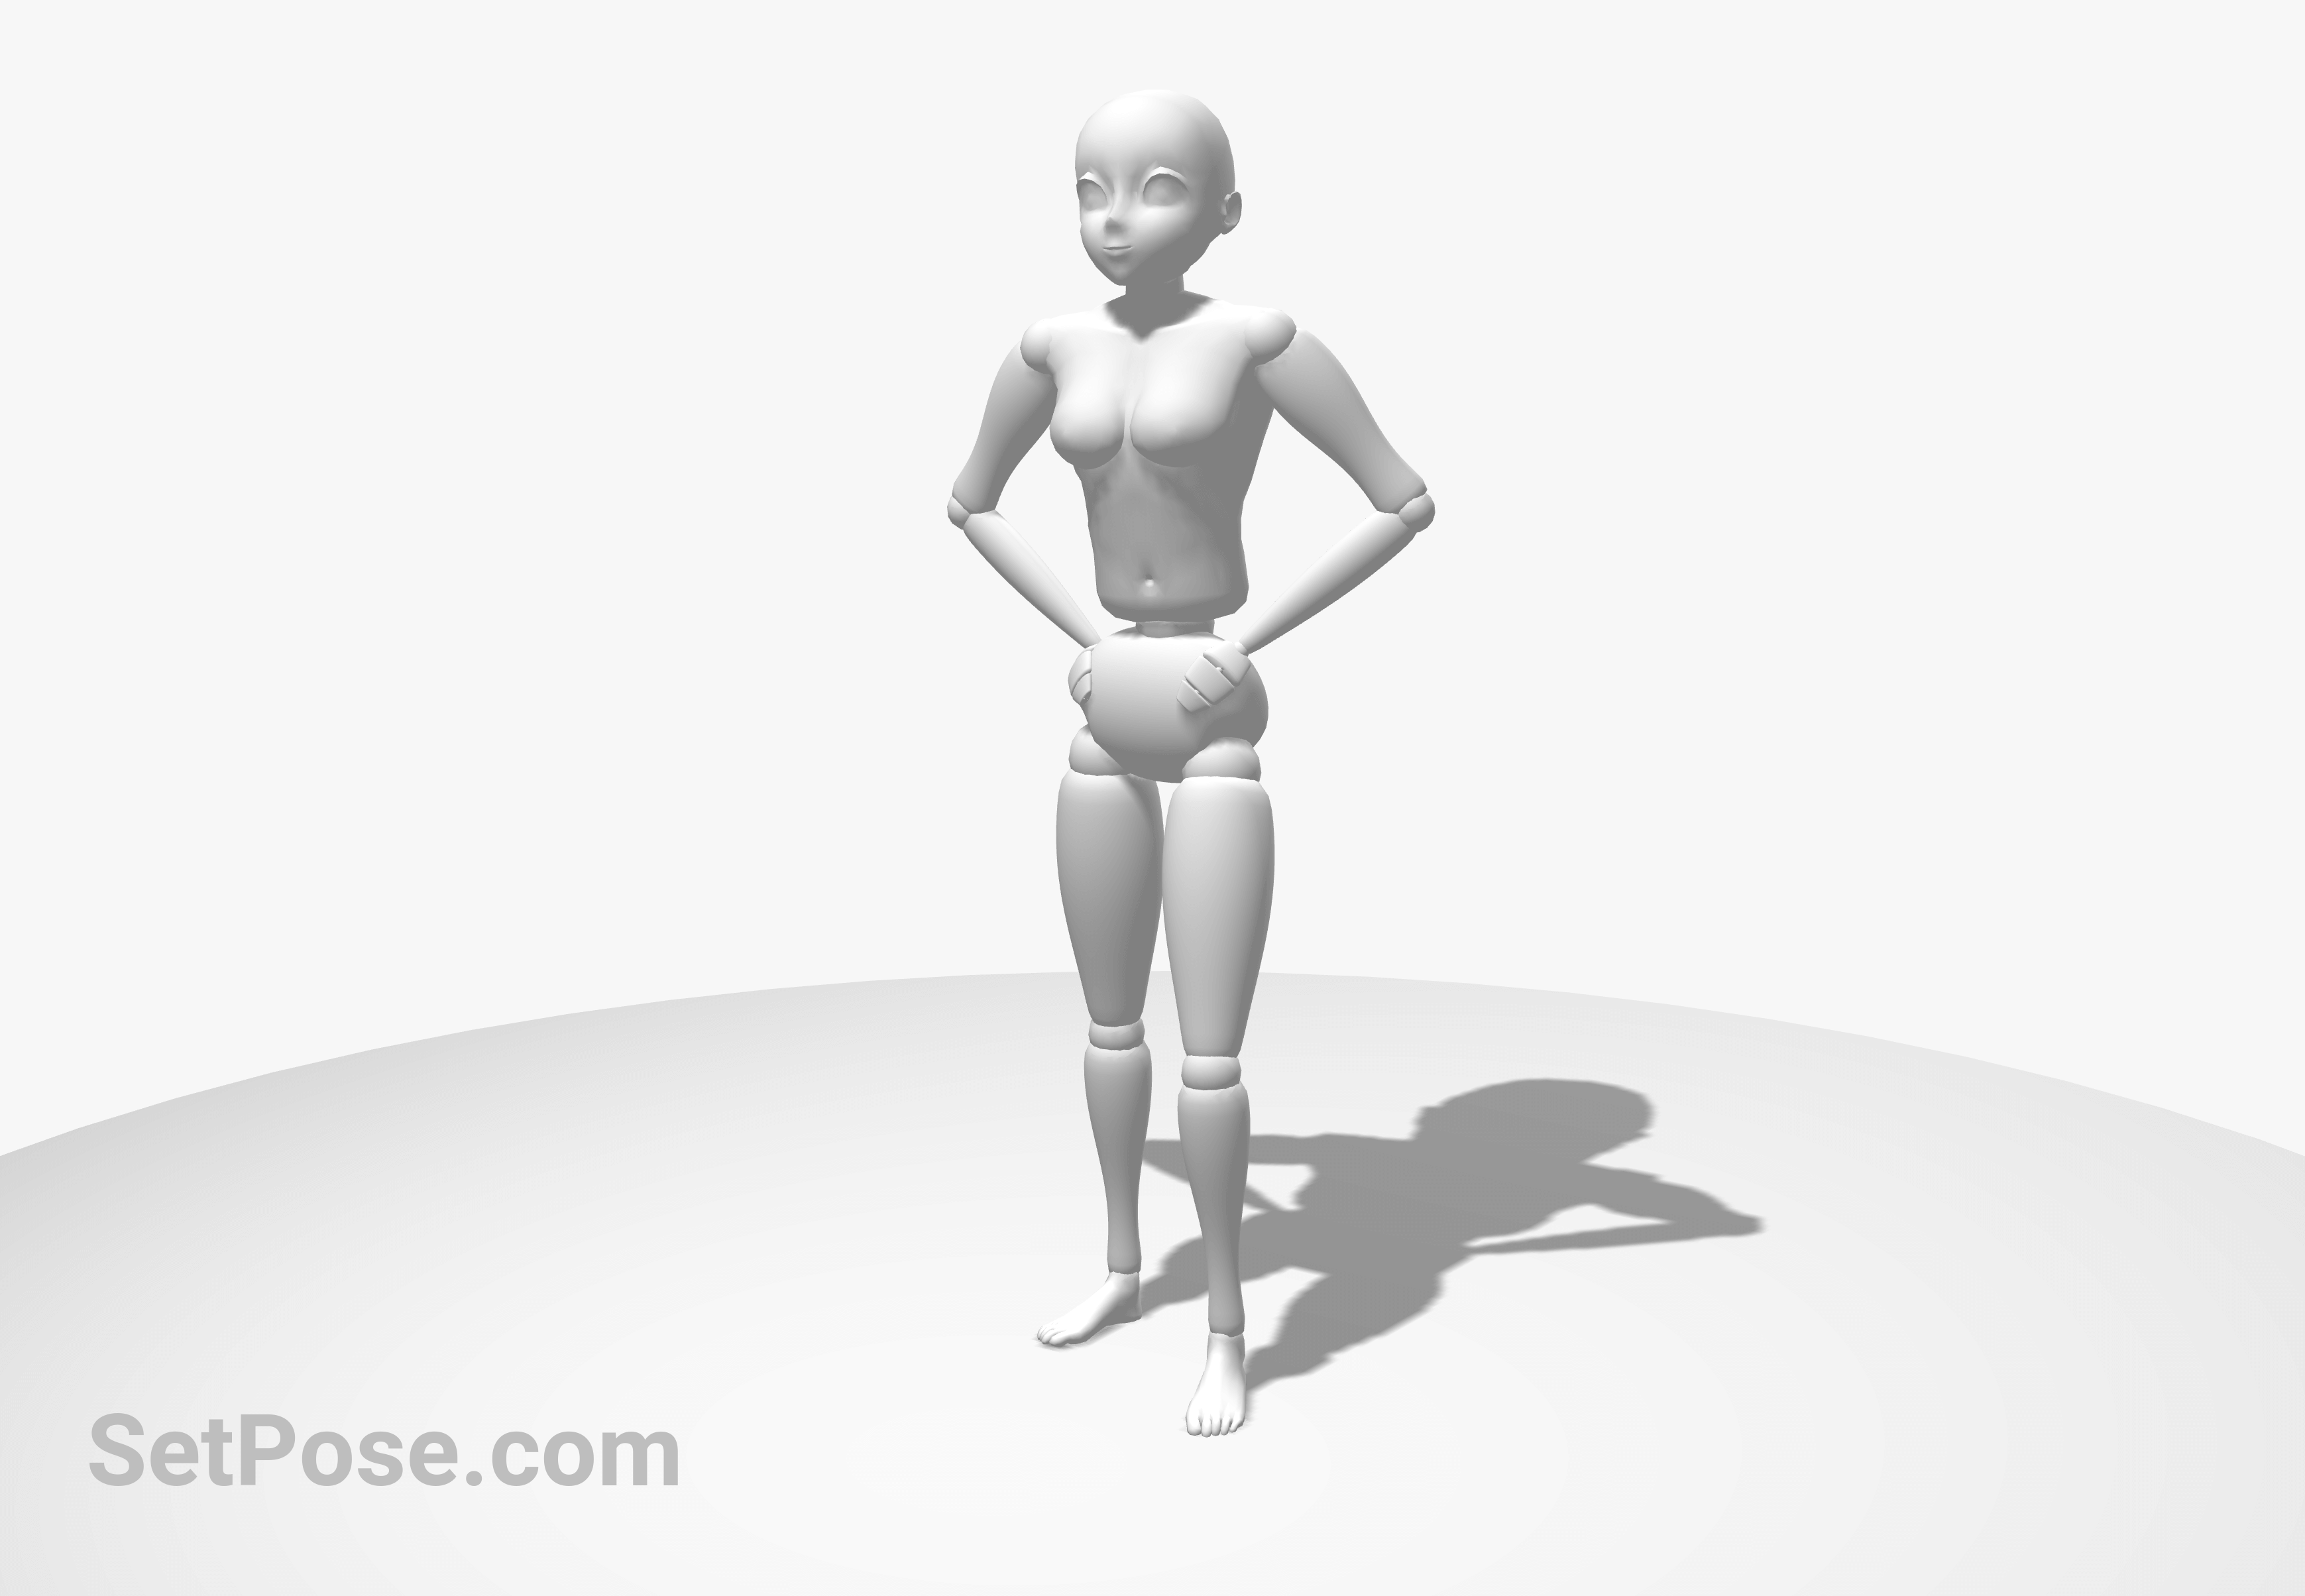 Modelo 3d gratis de personaje de criada de anime de belleza - .3ds, .MaMb  .Max, .Obj, .Vray - Open3dModel